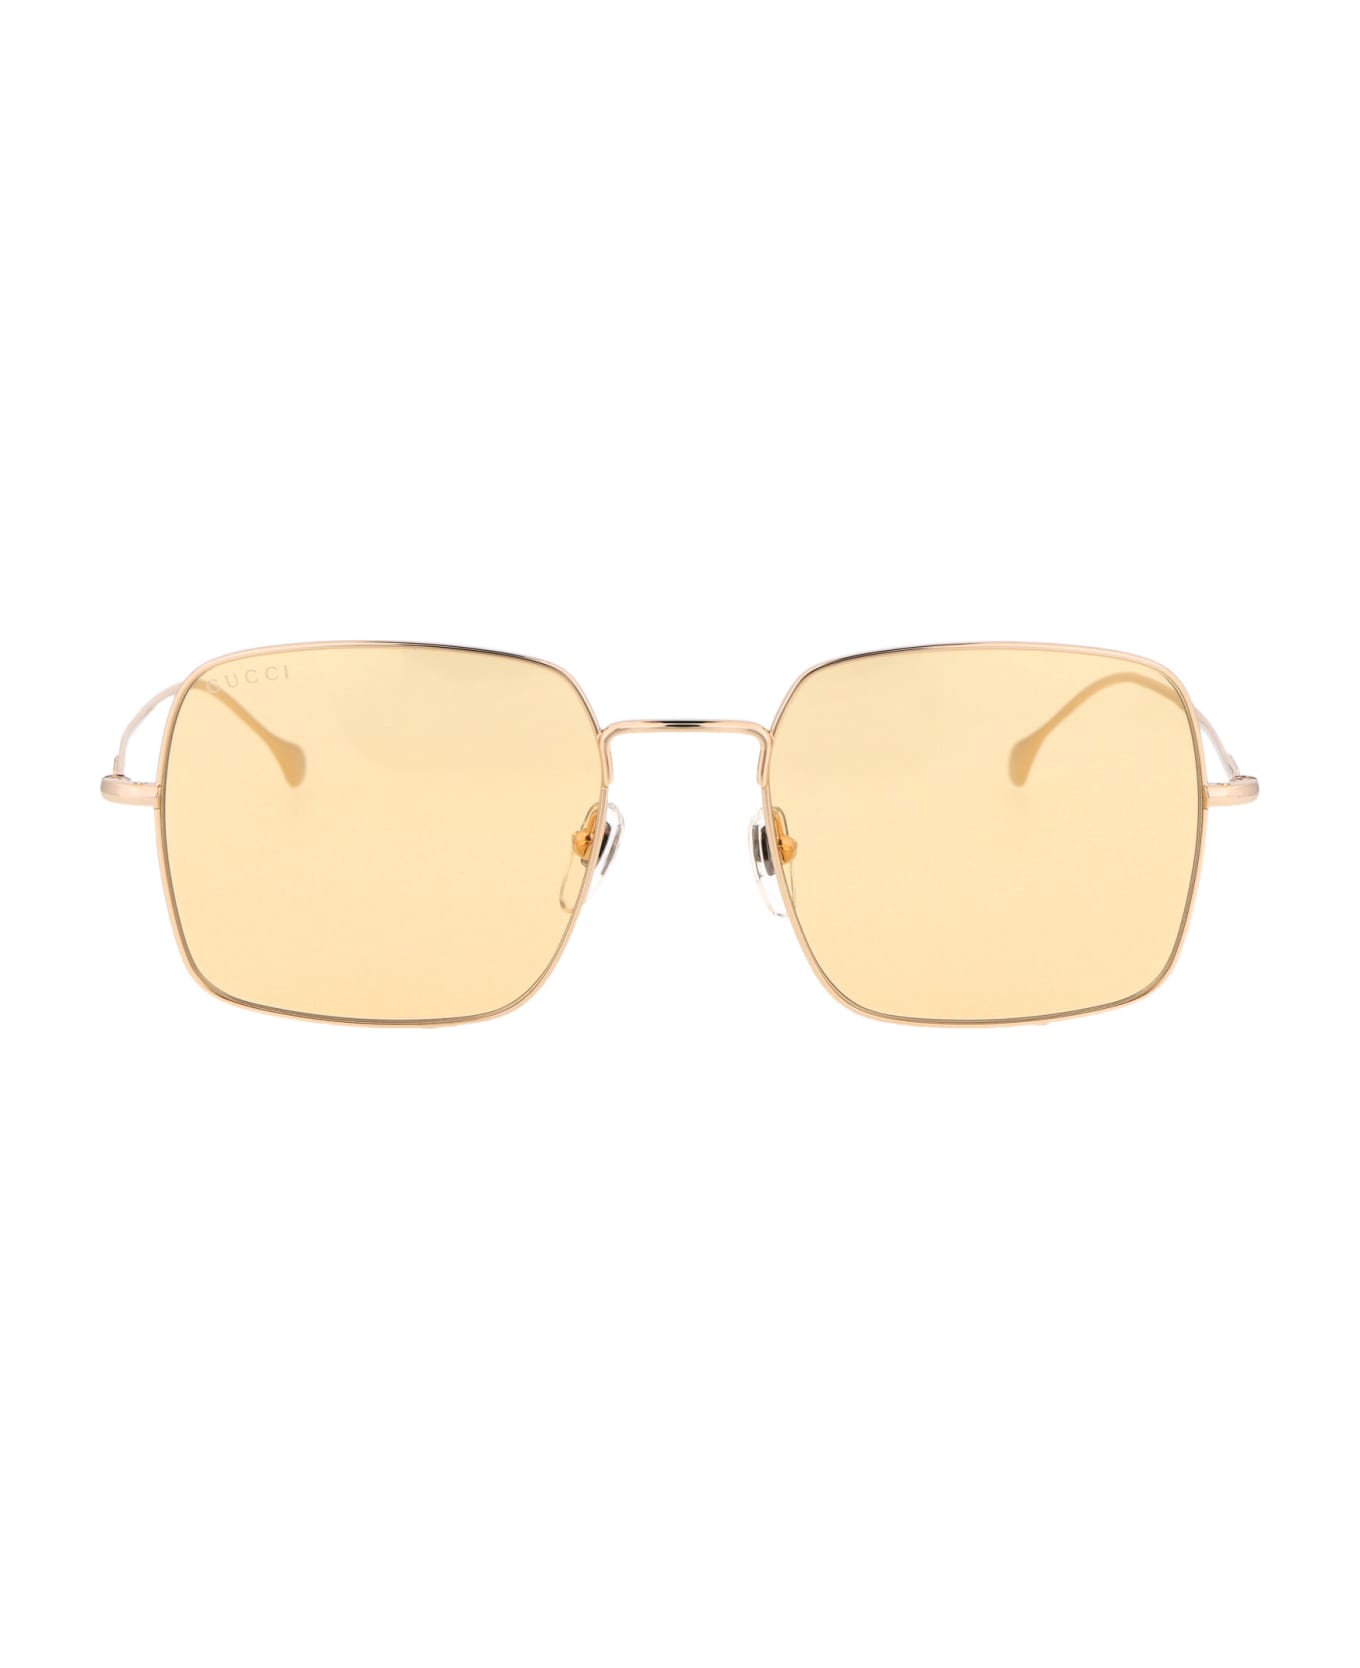 Gucci Eyewear Gg1184s Sunglasses - 003 GOLD GOLD ORANGE